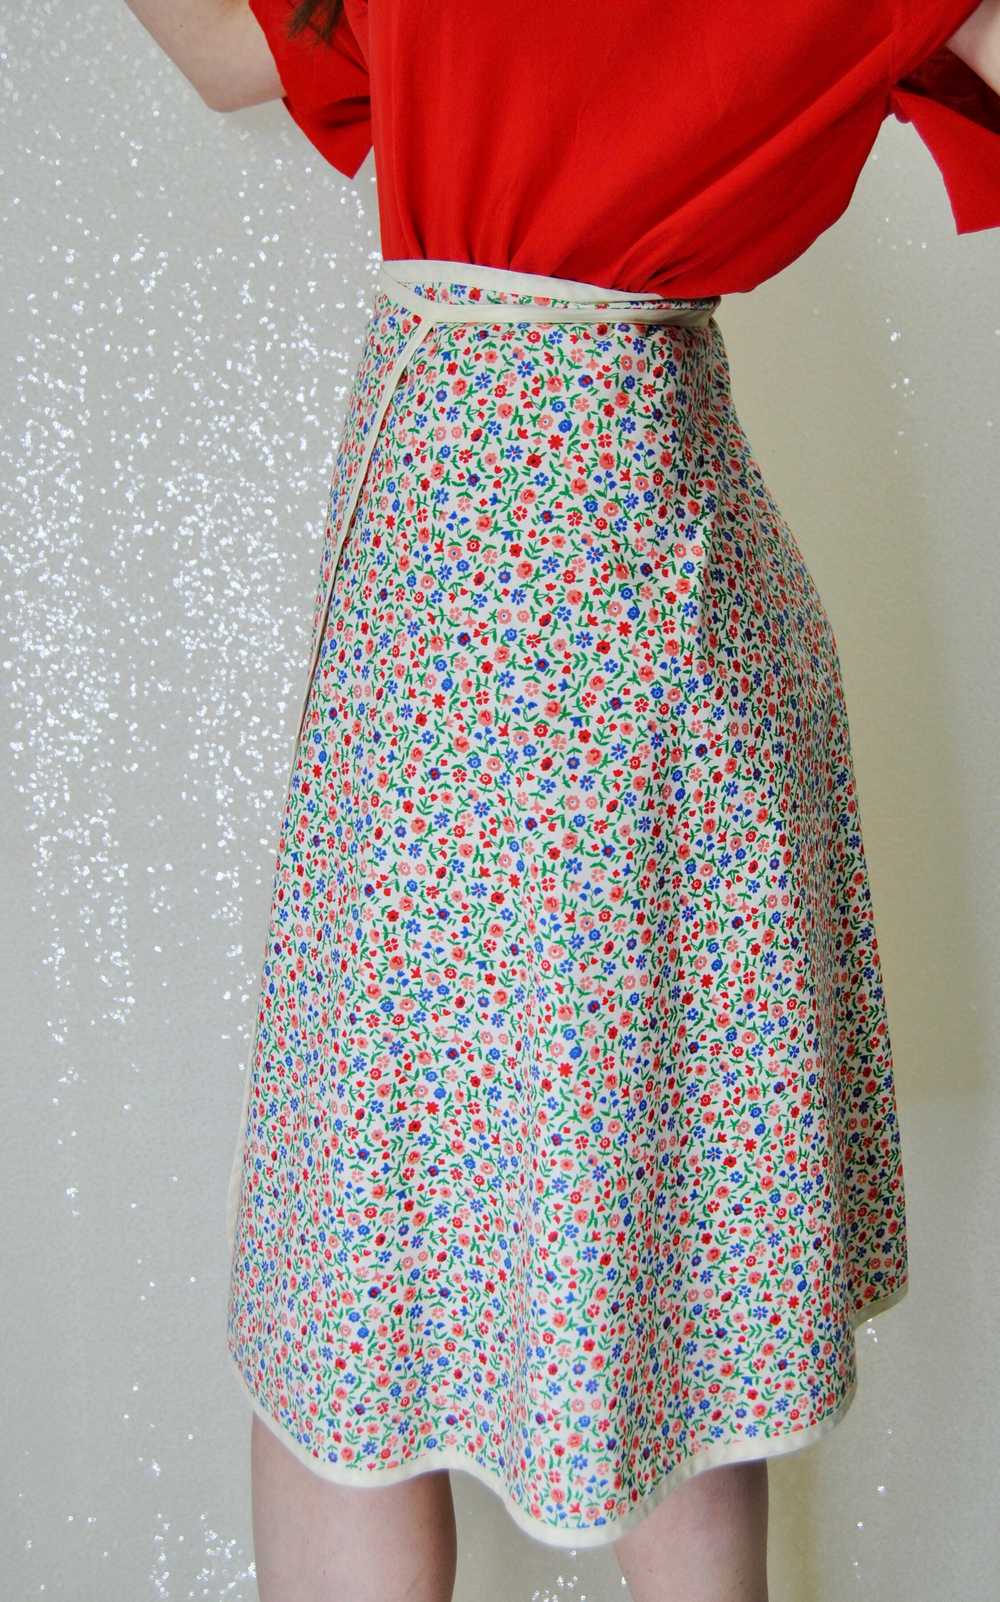 1970s Vintage Wrap Skirt - Open Size - image 2